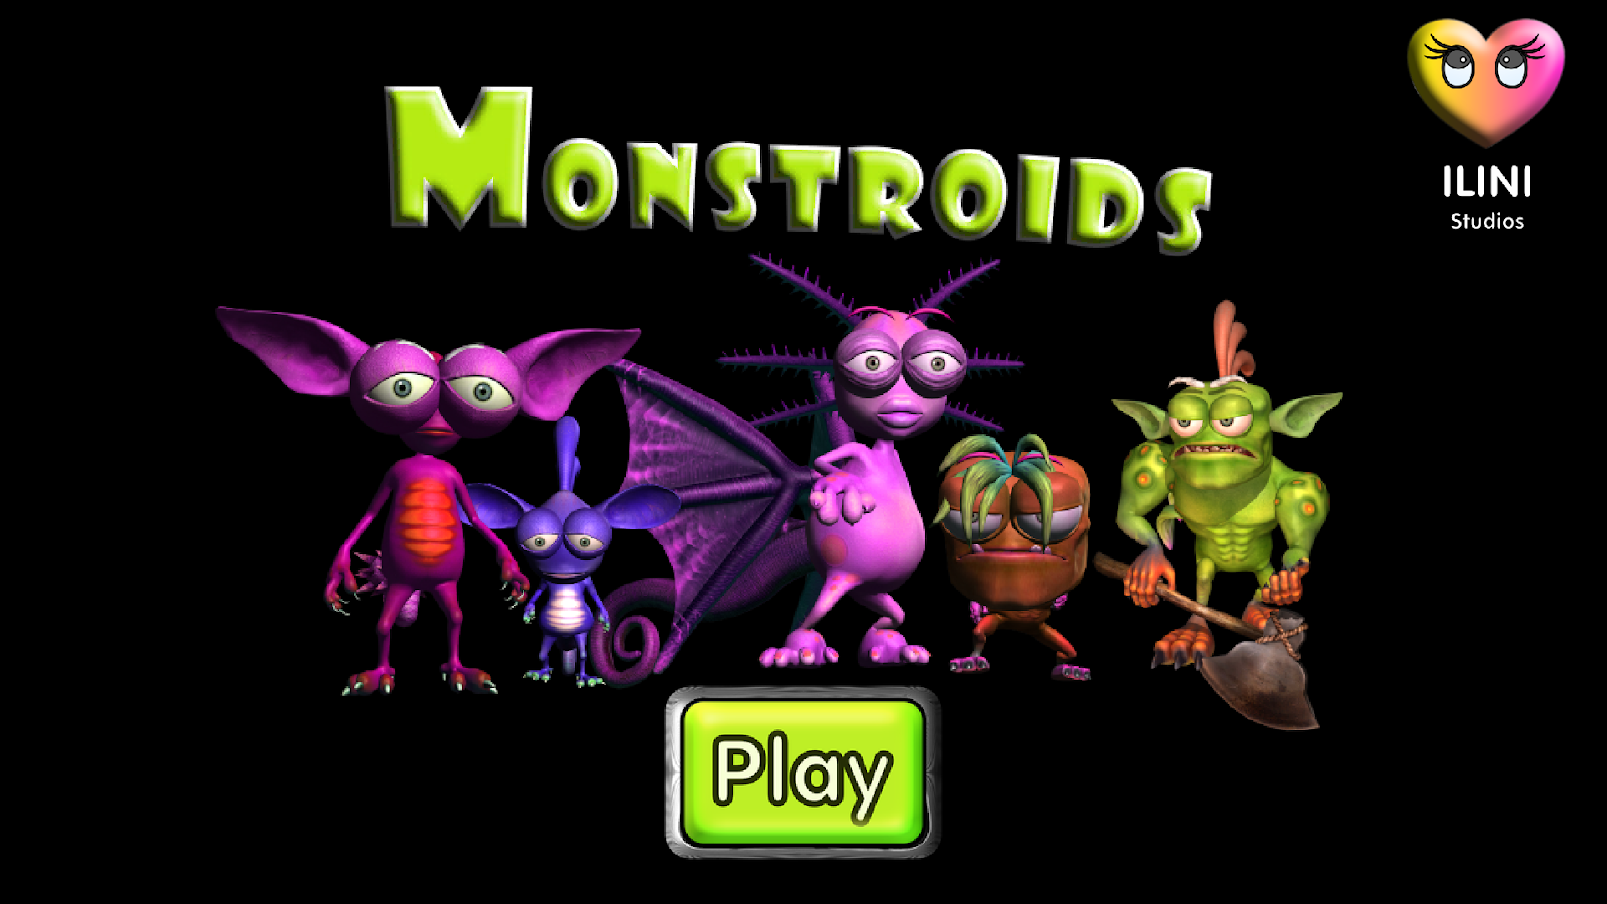 Monstroids